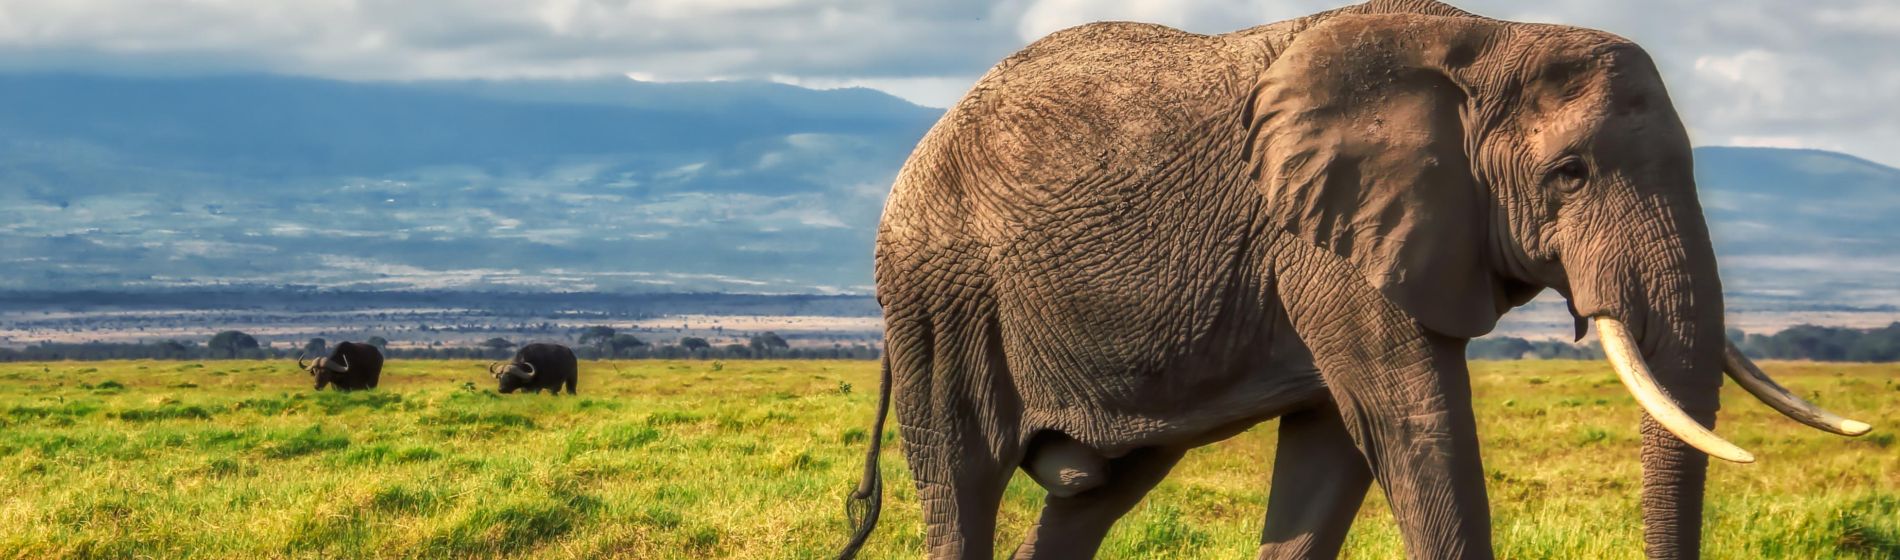 elephant_botswana.jpg